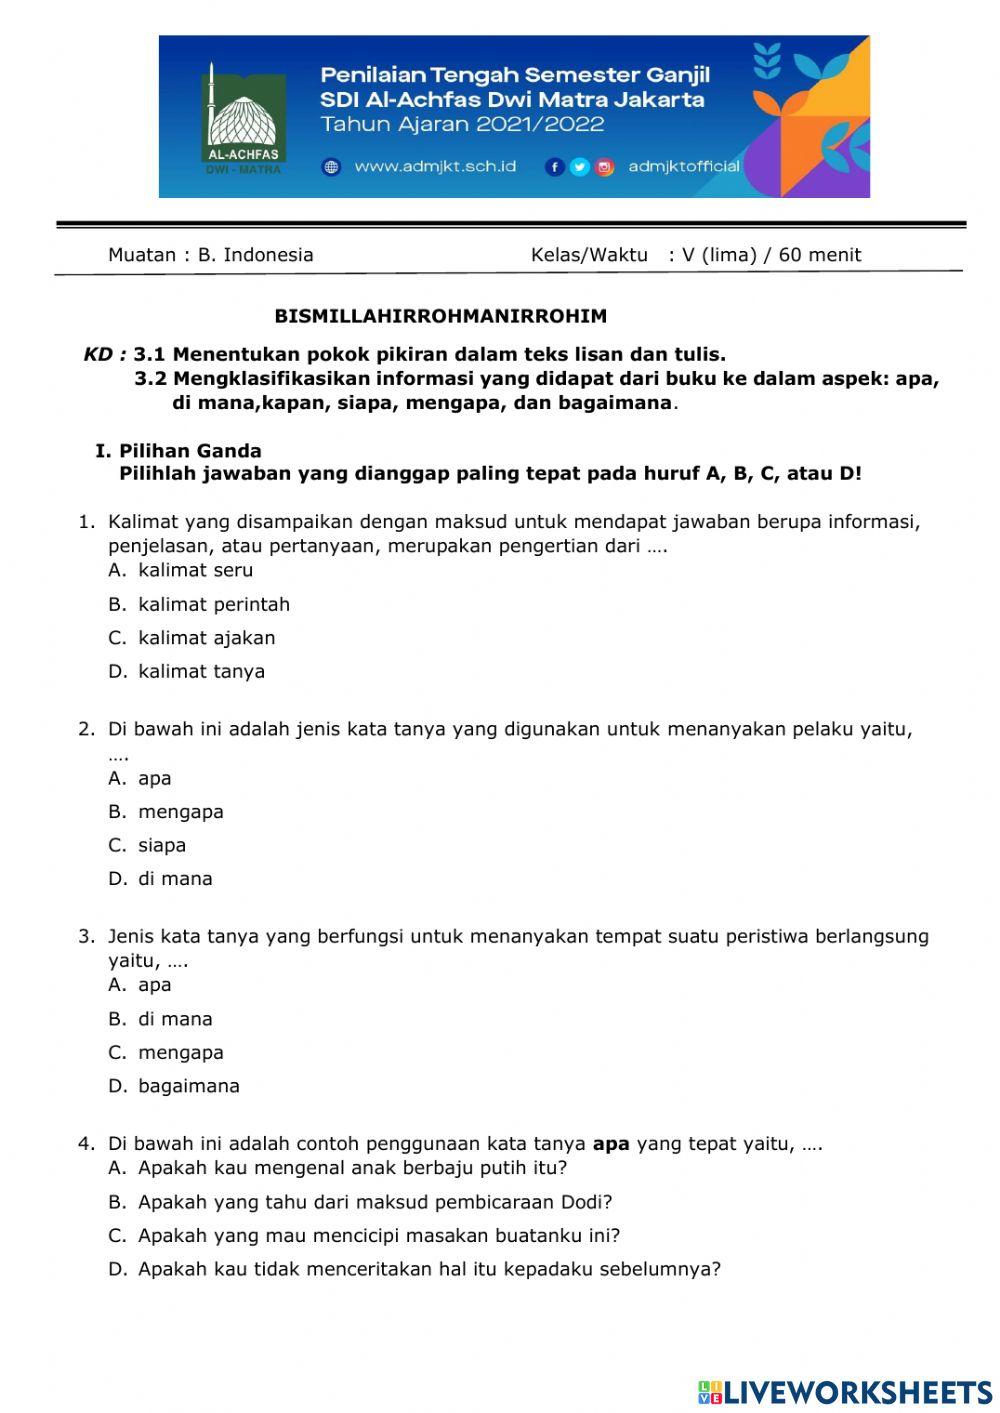 PTS Bahasa Indonesia